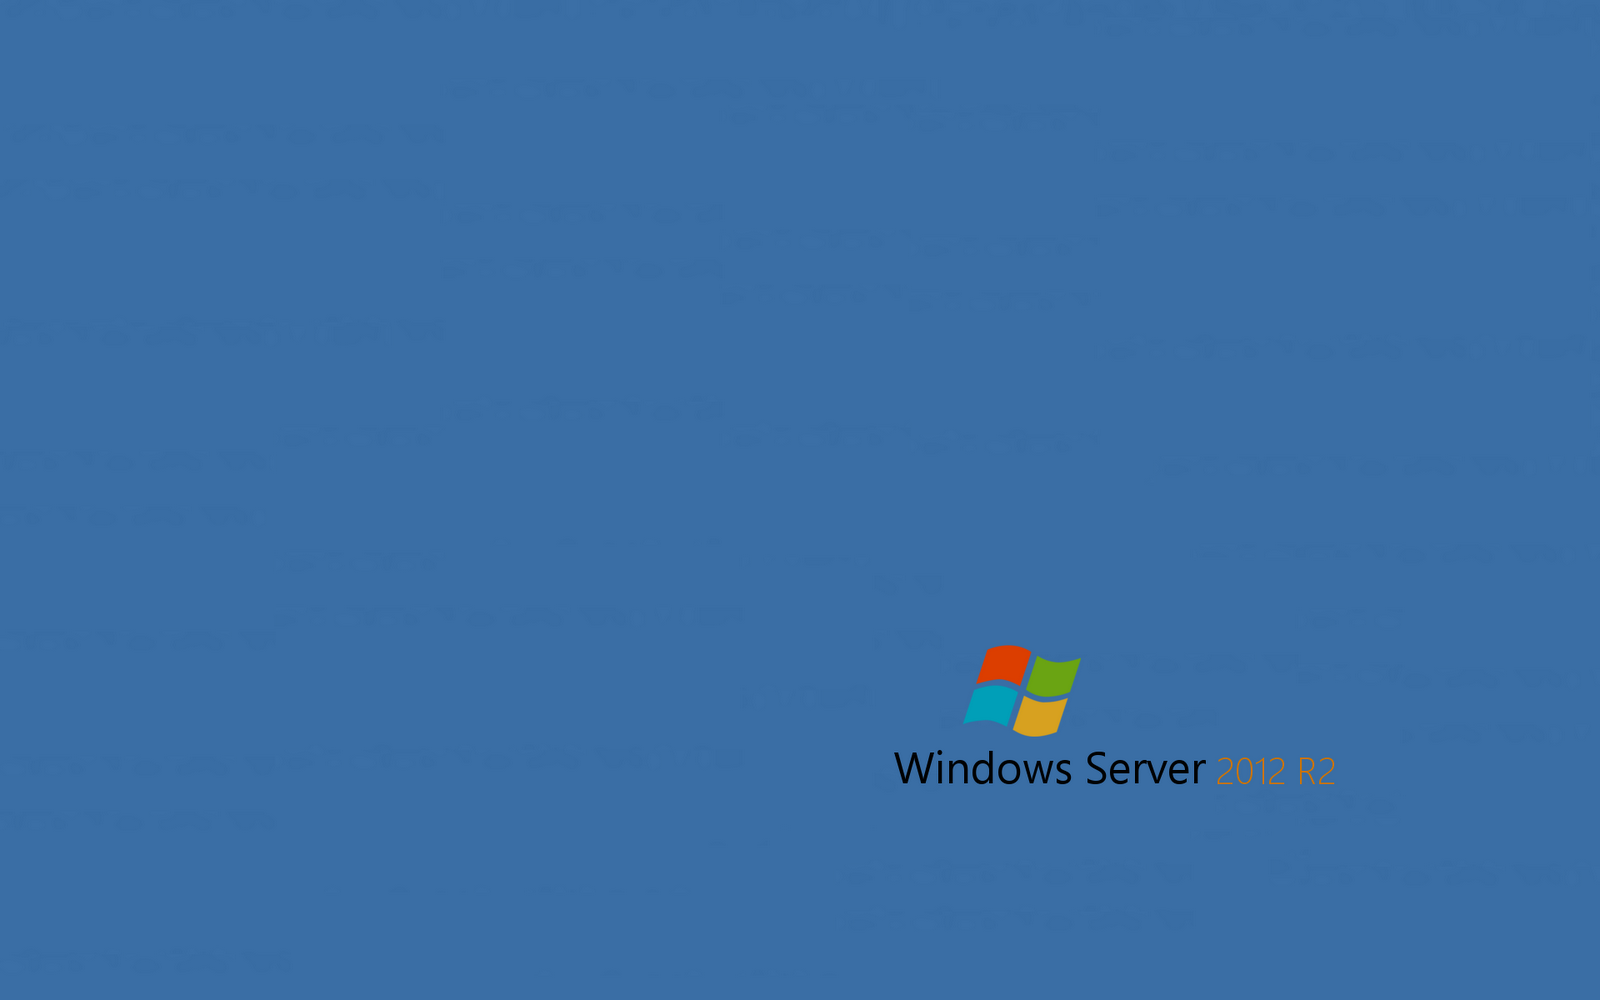 Windows Server Background